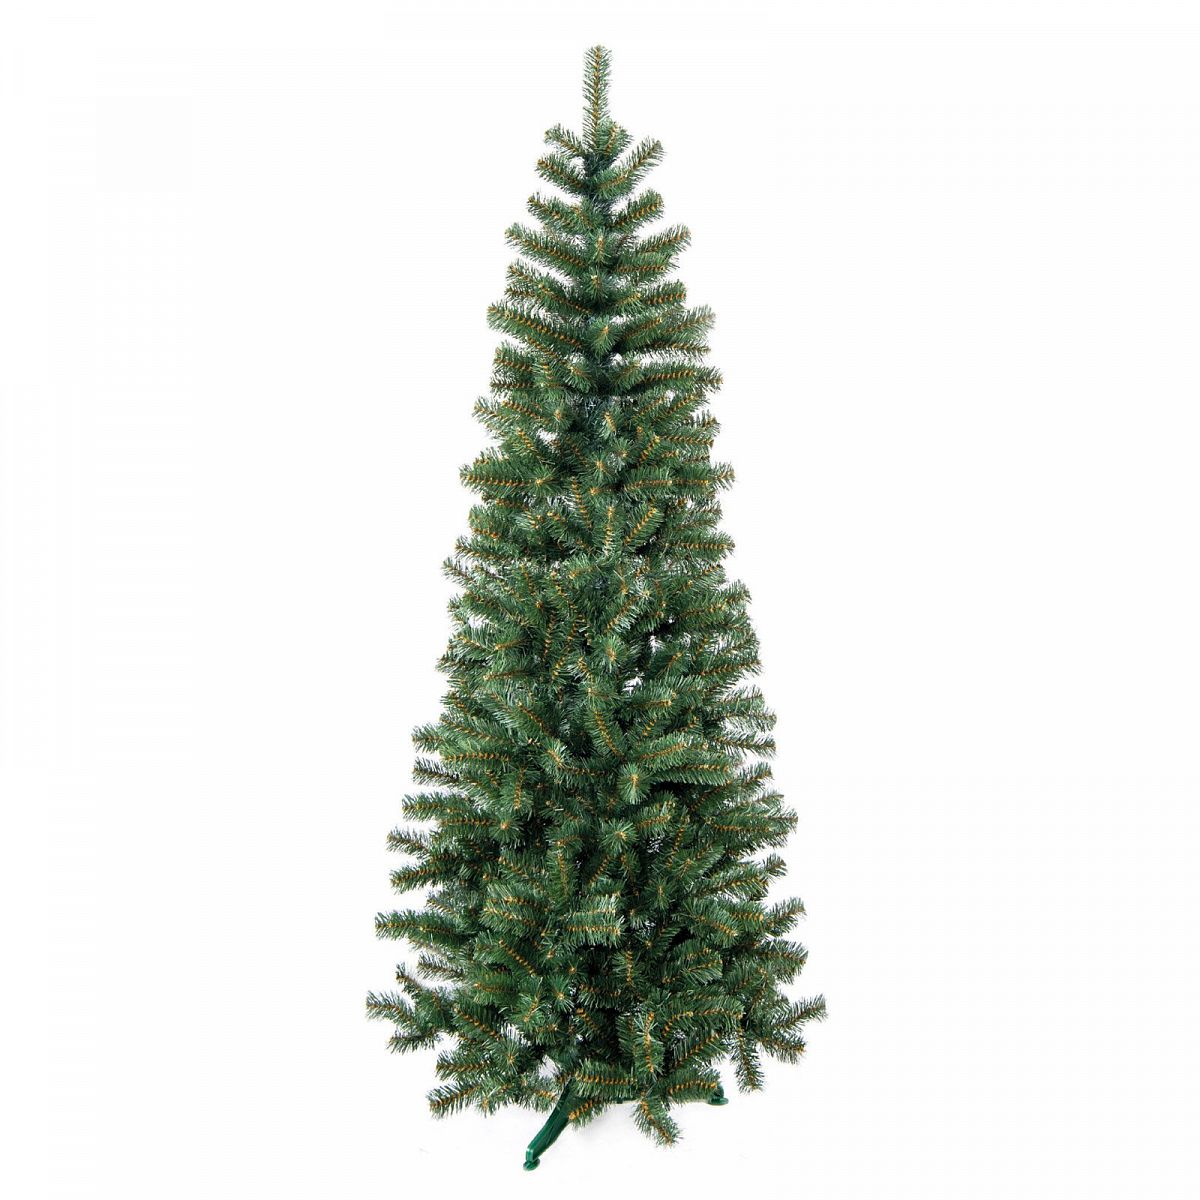 XMMS Edinburgh Artificial Slim Christmas Tree with Tree Skirt & Cotton Gloves Pine Green Needles